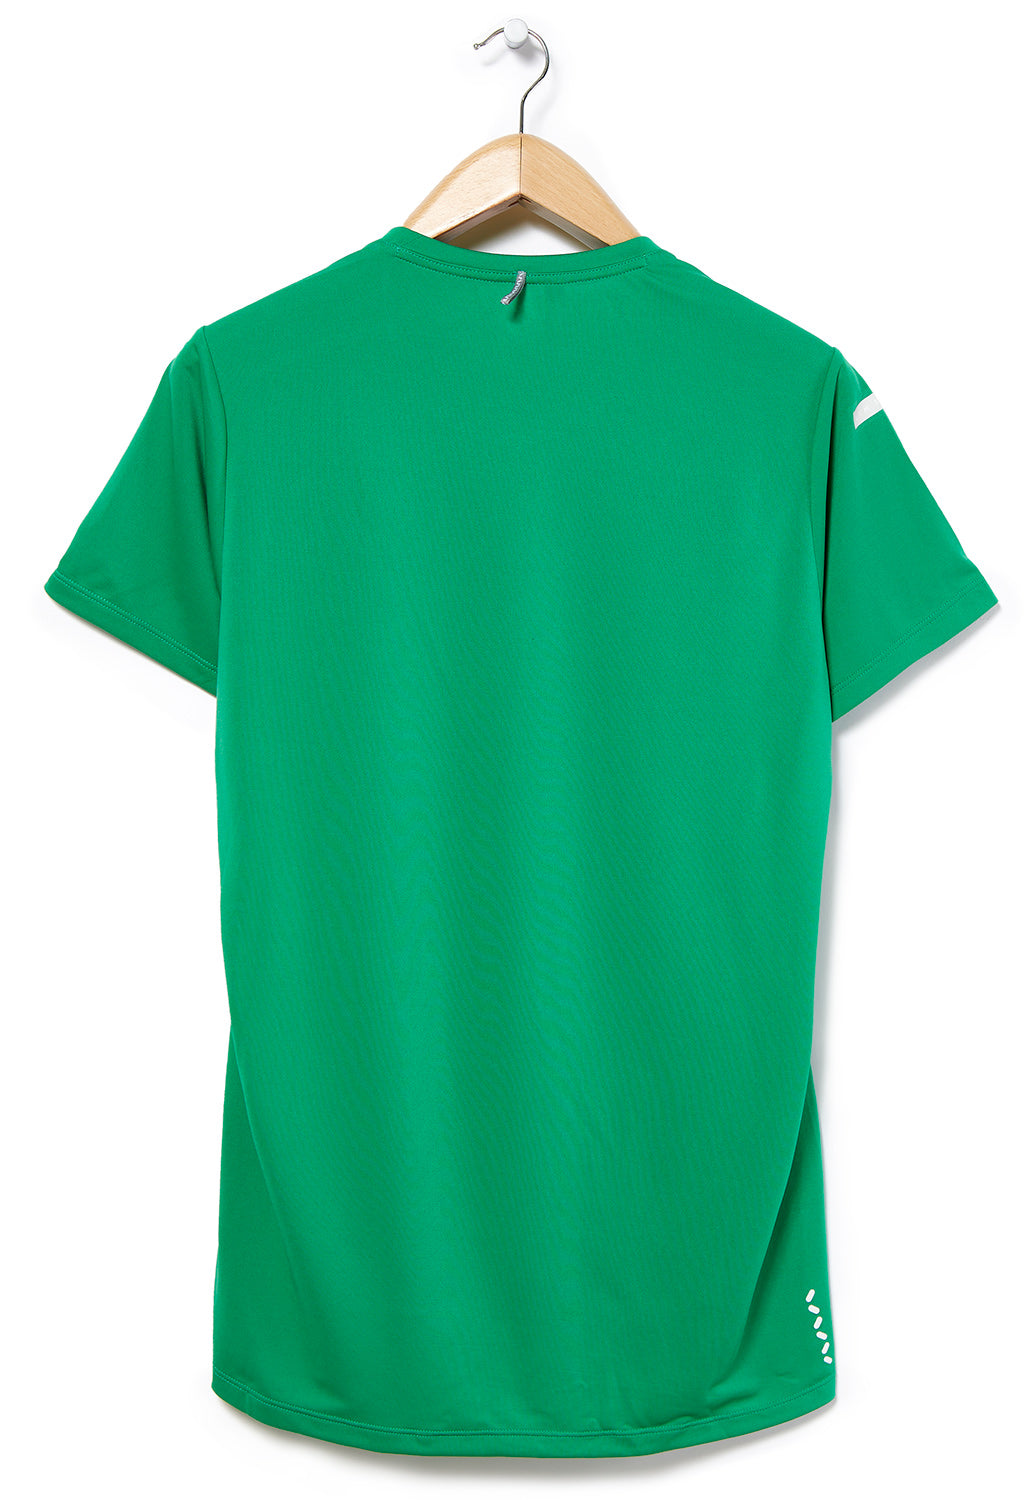 Haglöfs Men's L.I.M Tech T-Shirt - Jelly Green